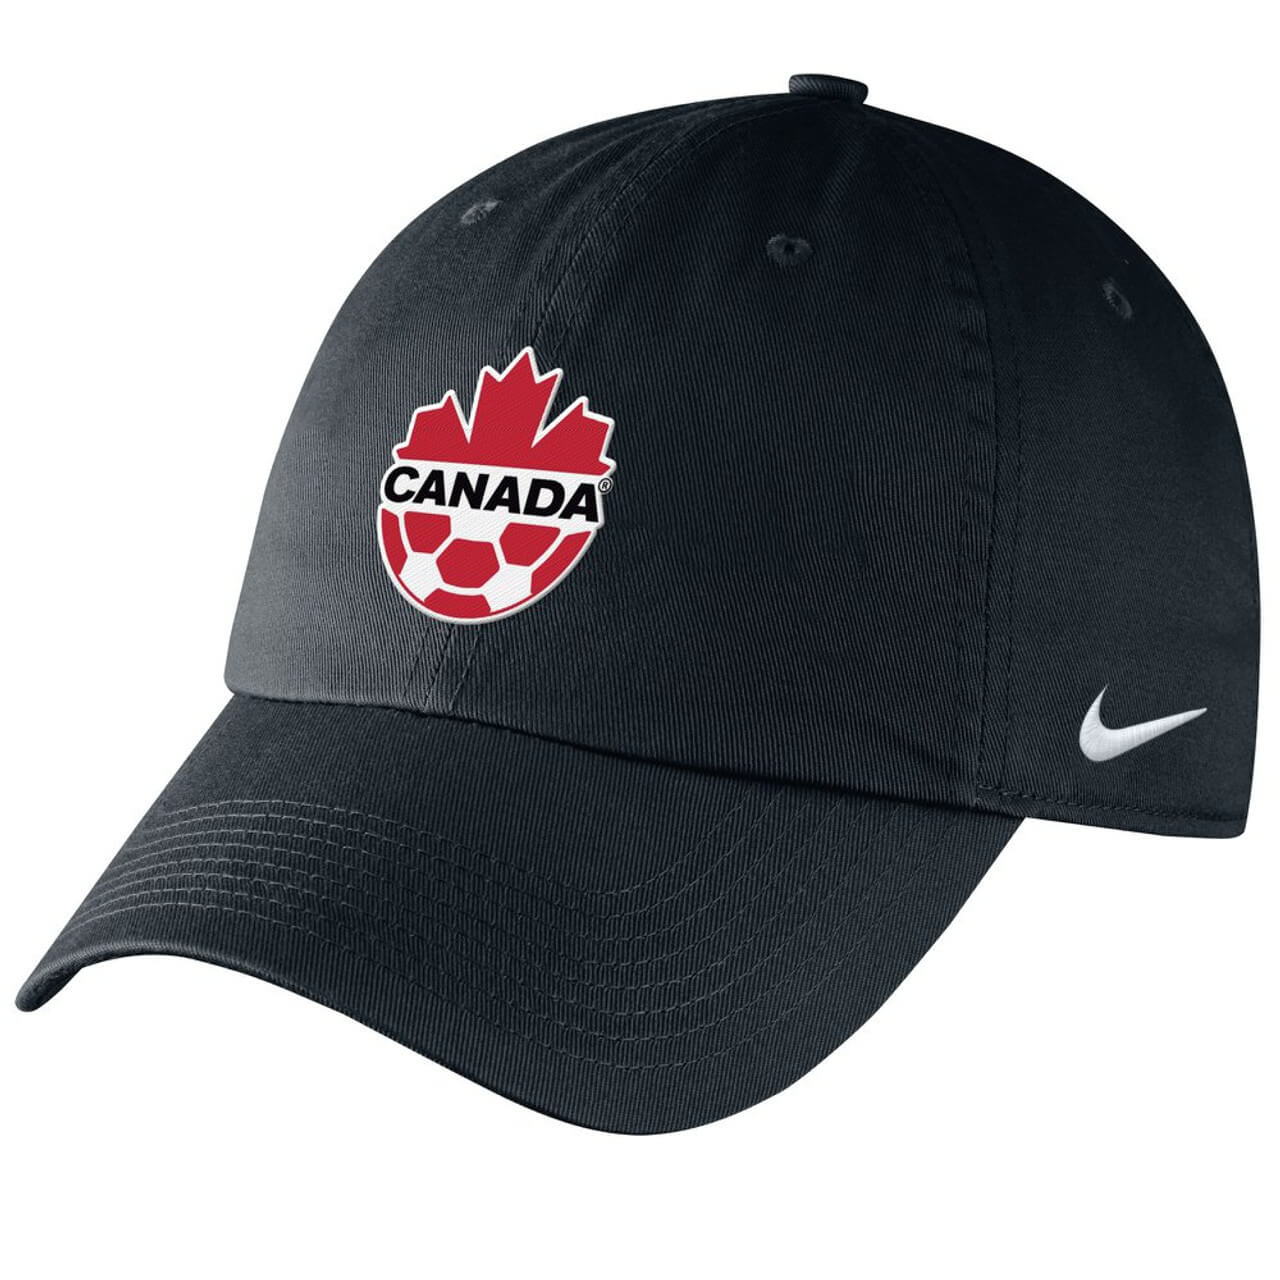 Nike Canada Soccer Campus Adjustable Cap Black (Front)